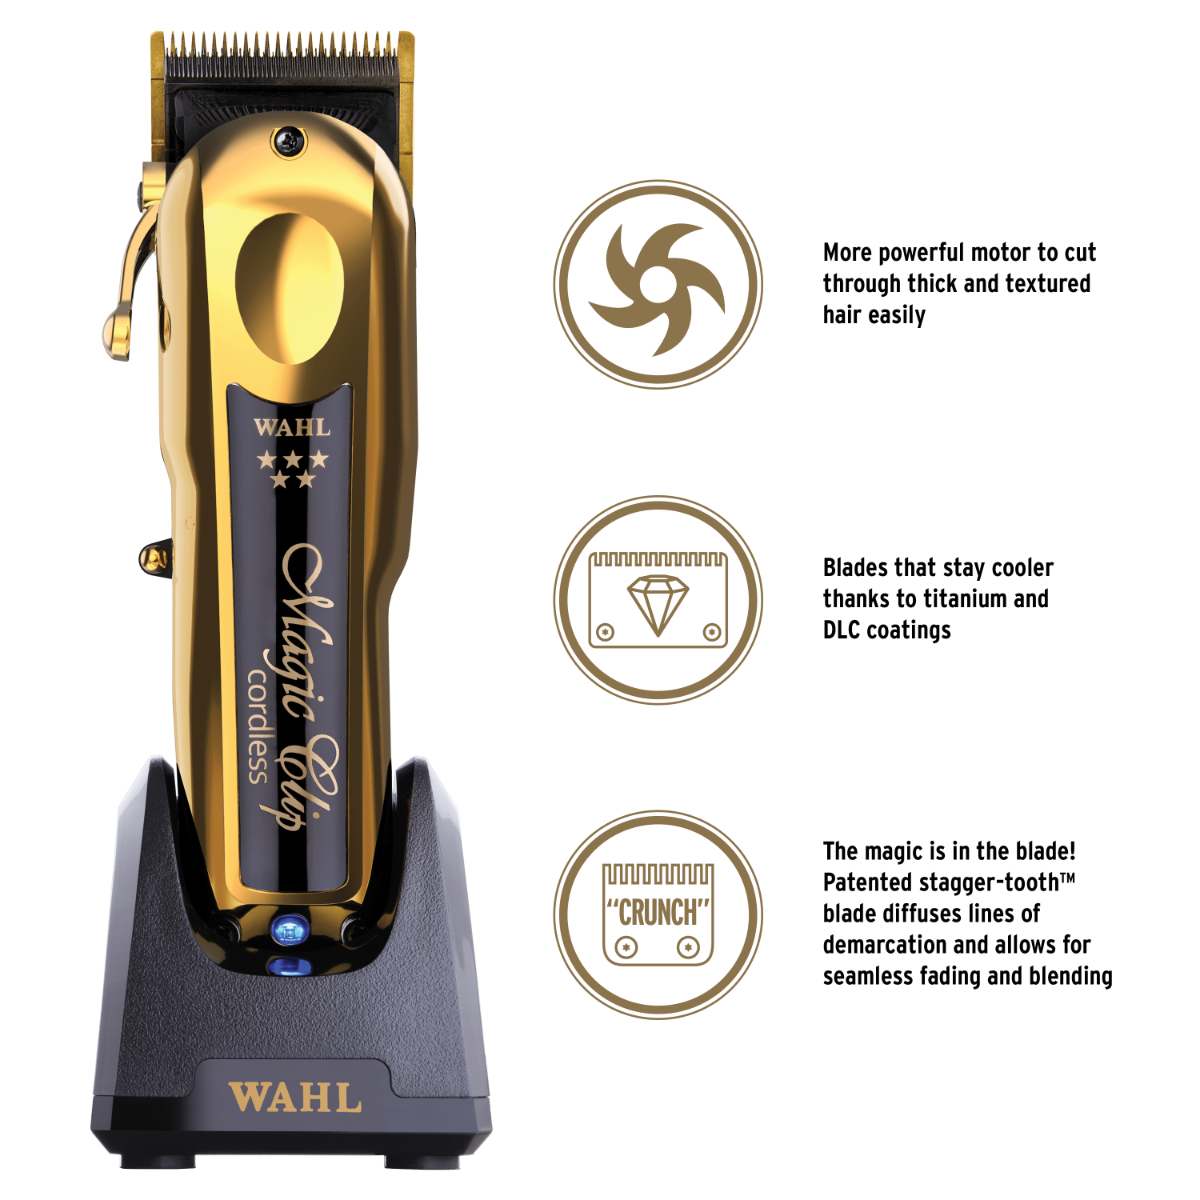 Wahl Gold Cordless Magic Clip + Trimmer + Vanish Shaver